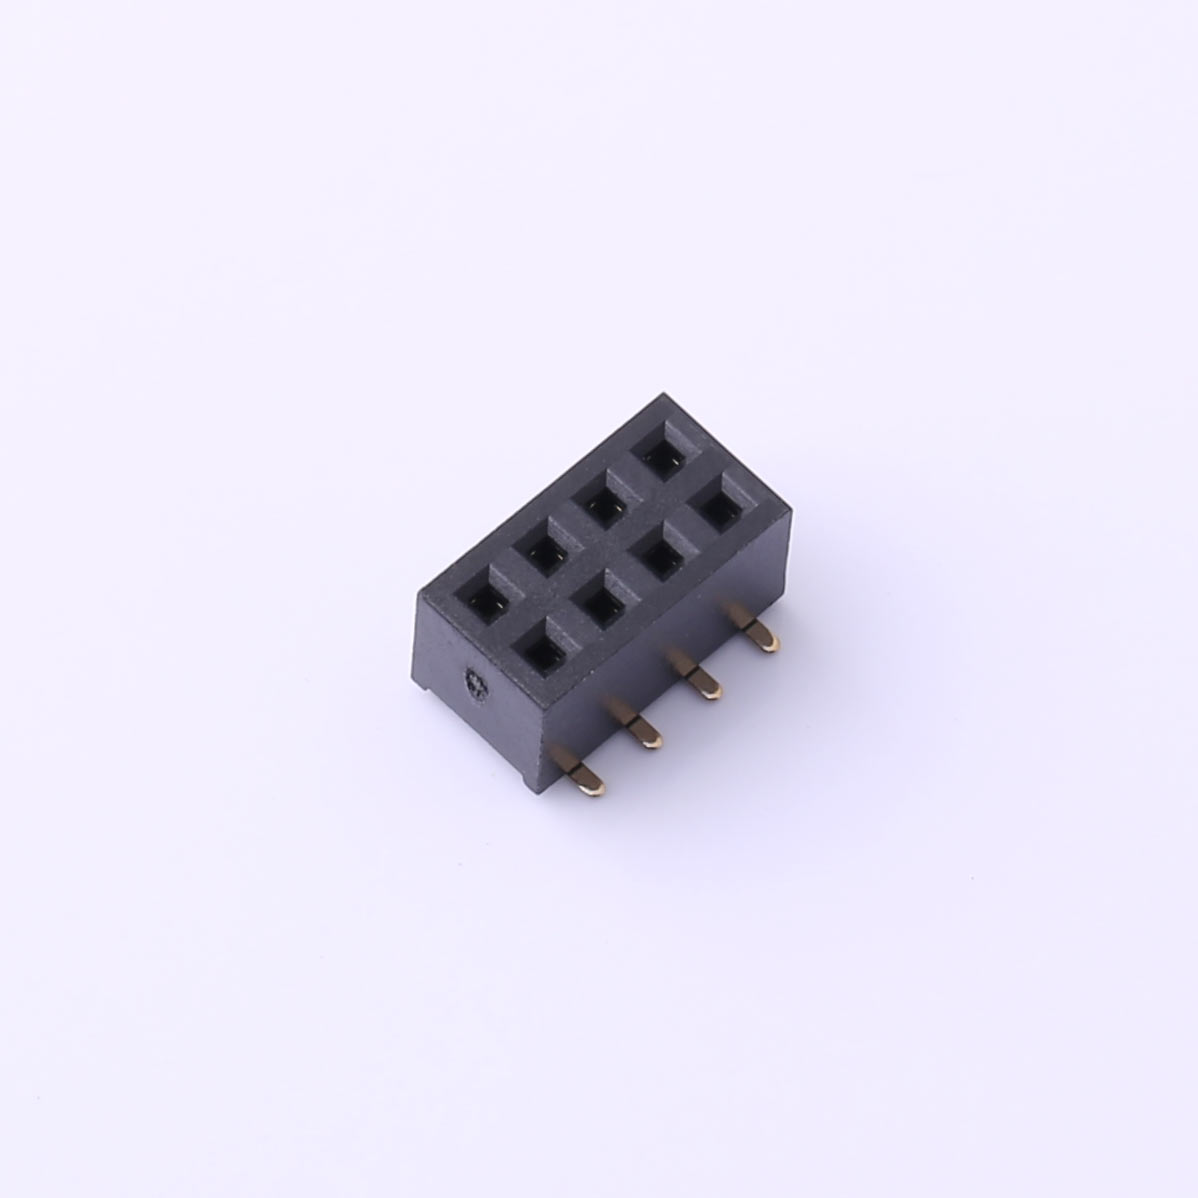 Kinghelm 2mm Female Header Connector 2 Rows*4Pin 1.5A - KH-2FH-2X4P-H4.3-SMT